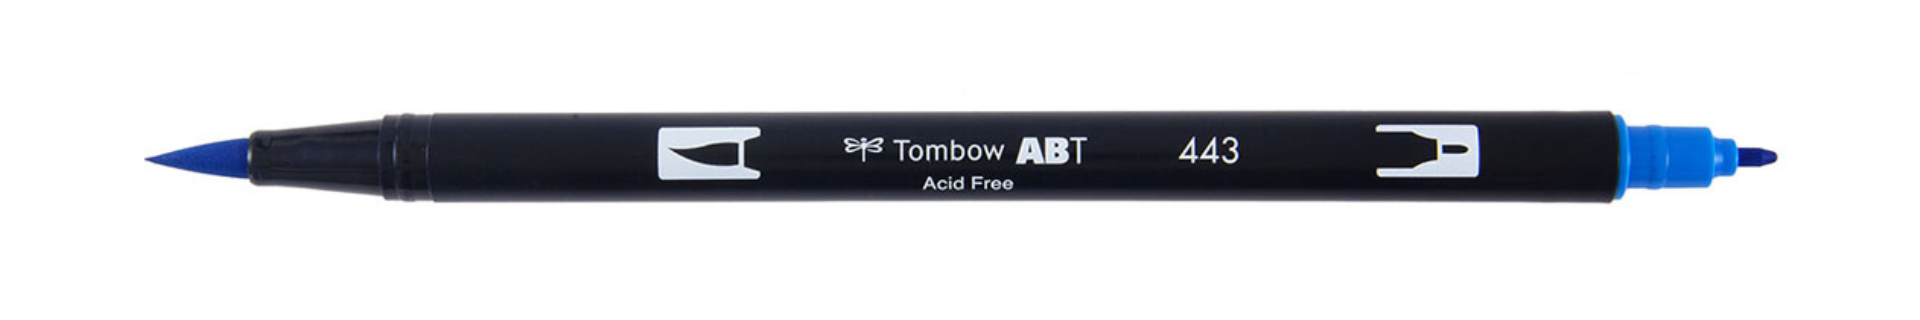 Tombow ABT